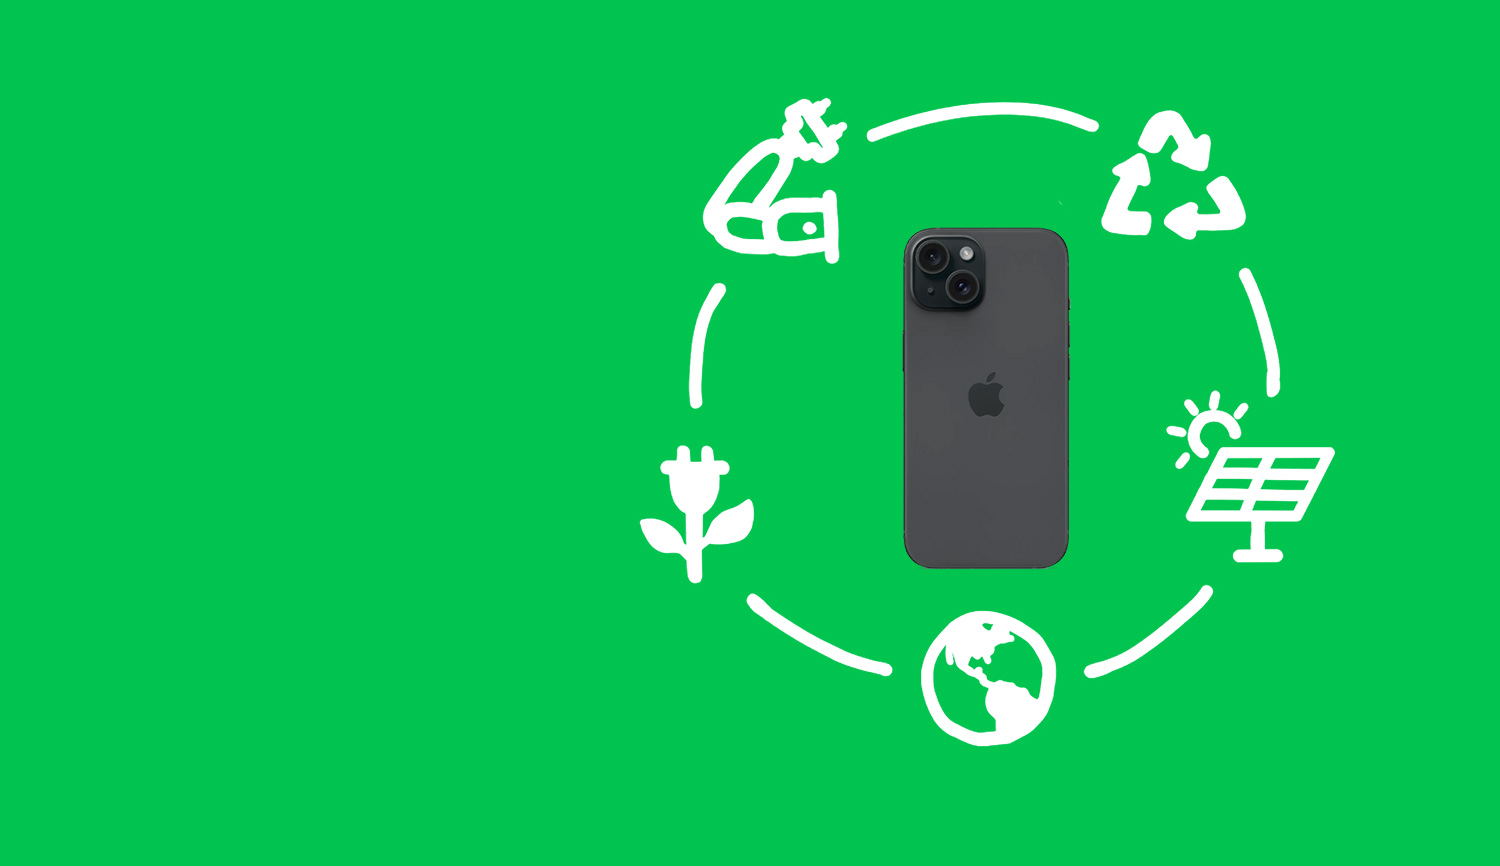 На изображении iPhone 15 и символика экологии, утилизации